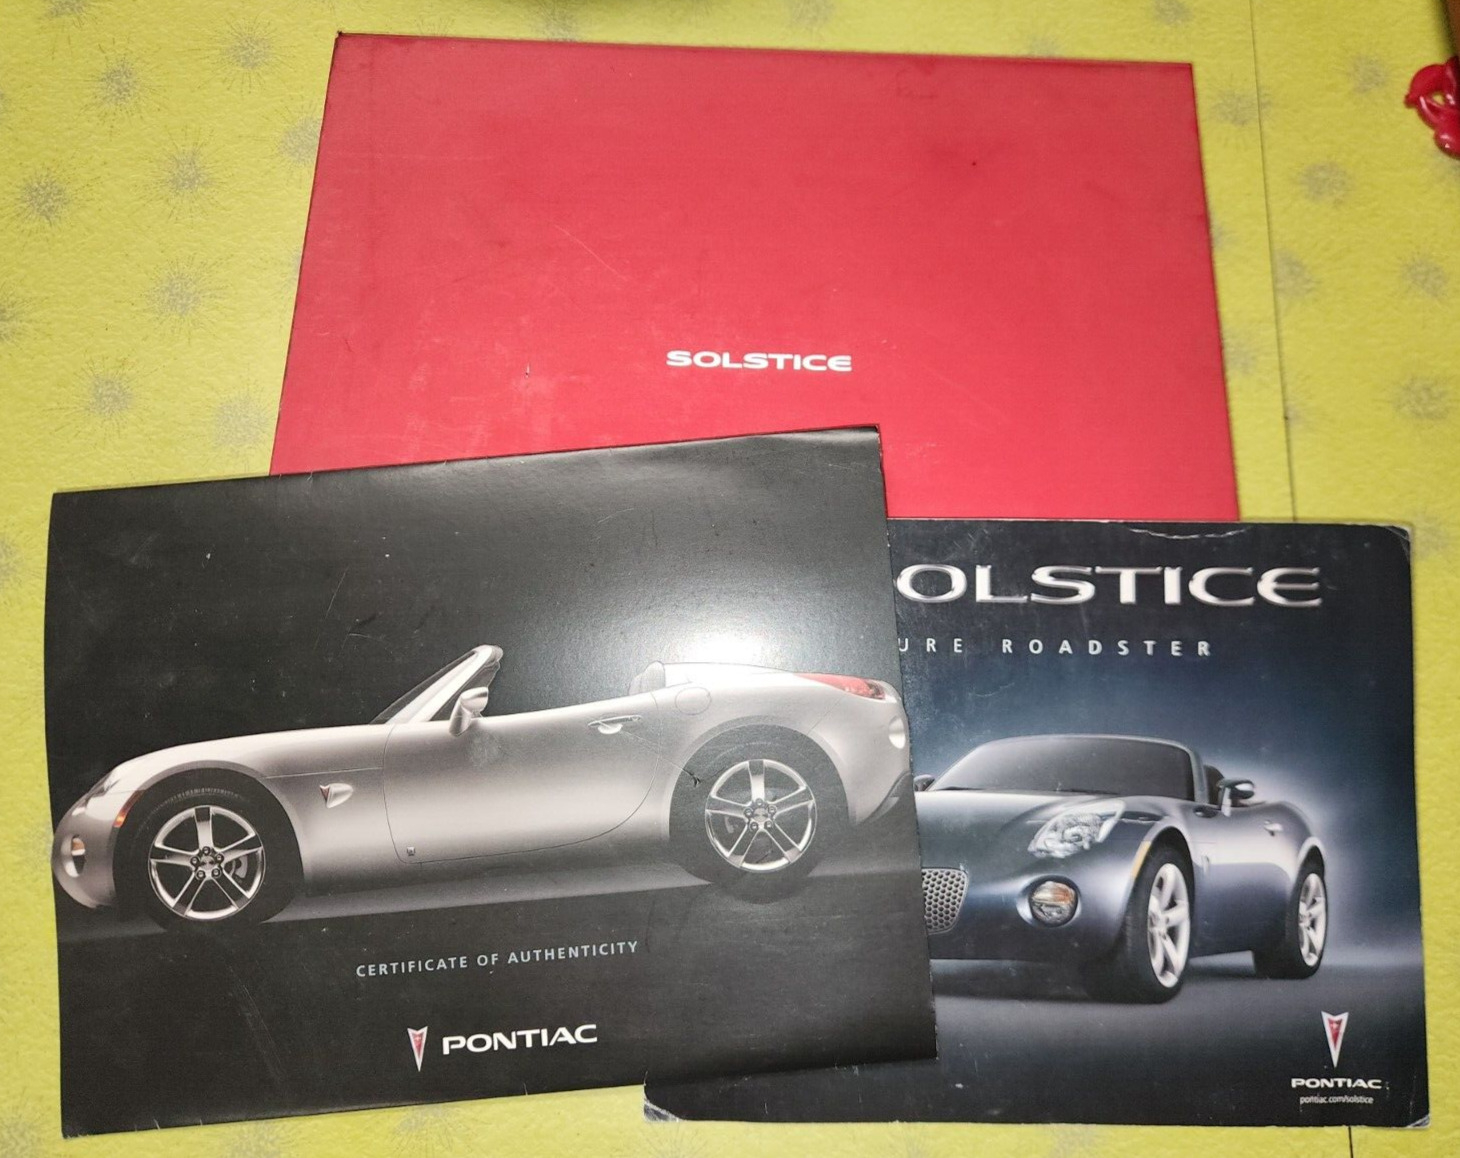 2006 Pontiac Solstice First 1000 Ltd Edition Press Folio + COA